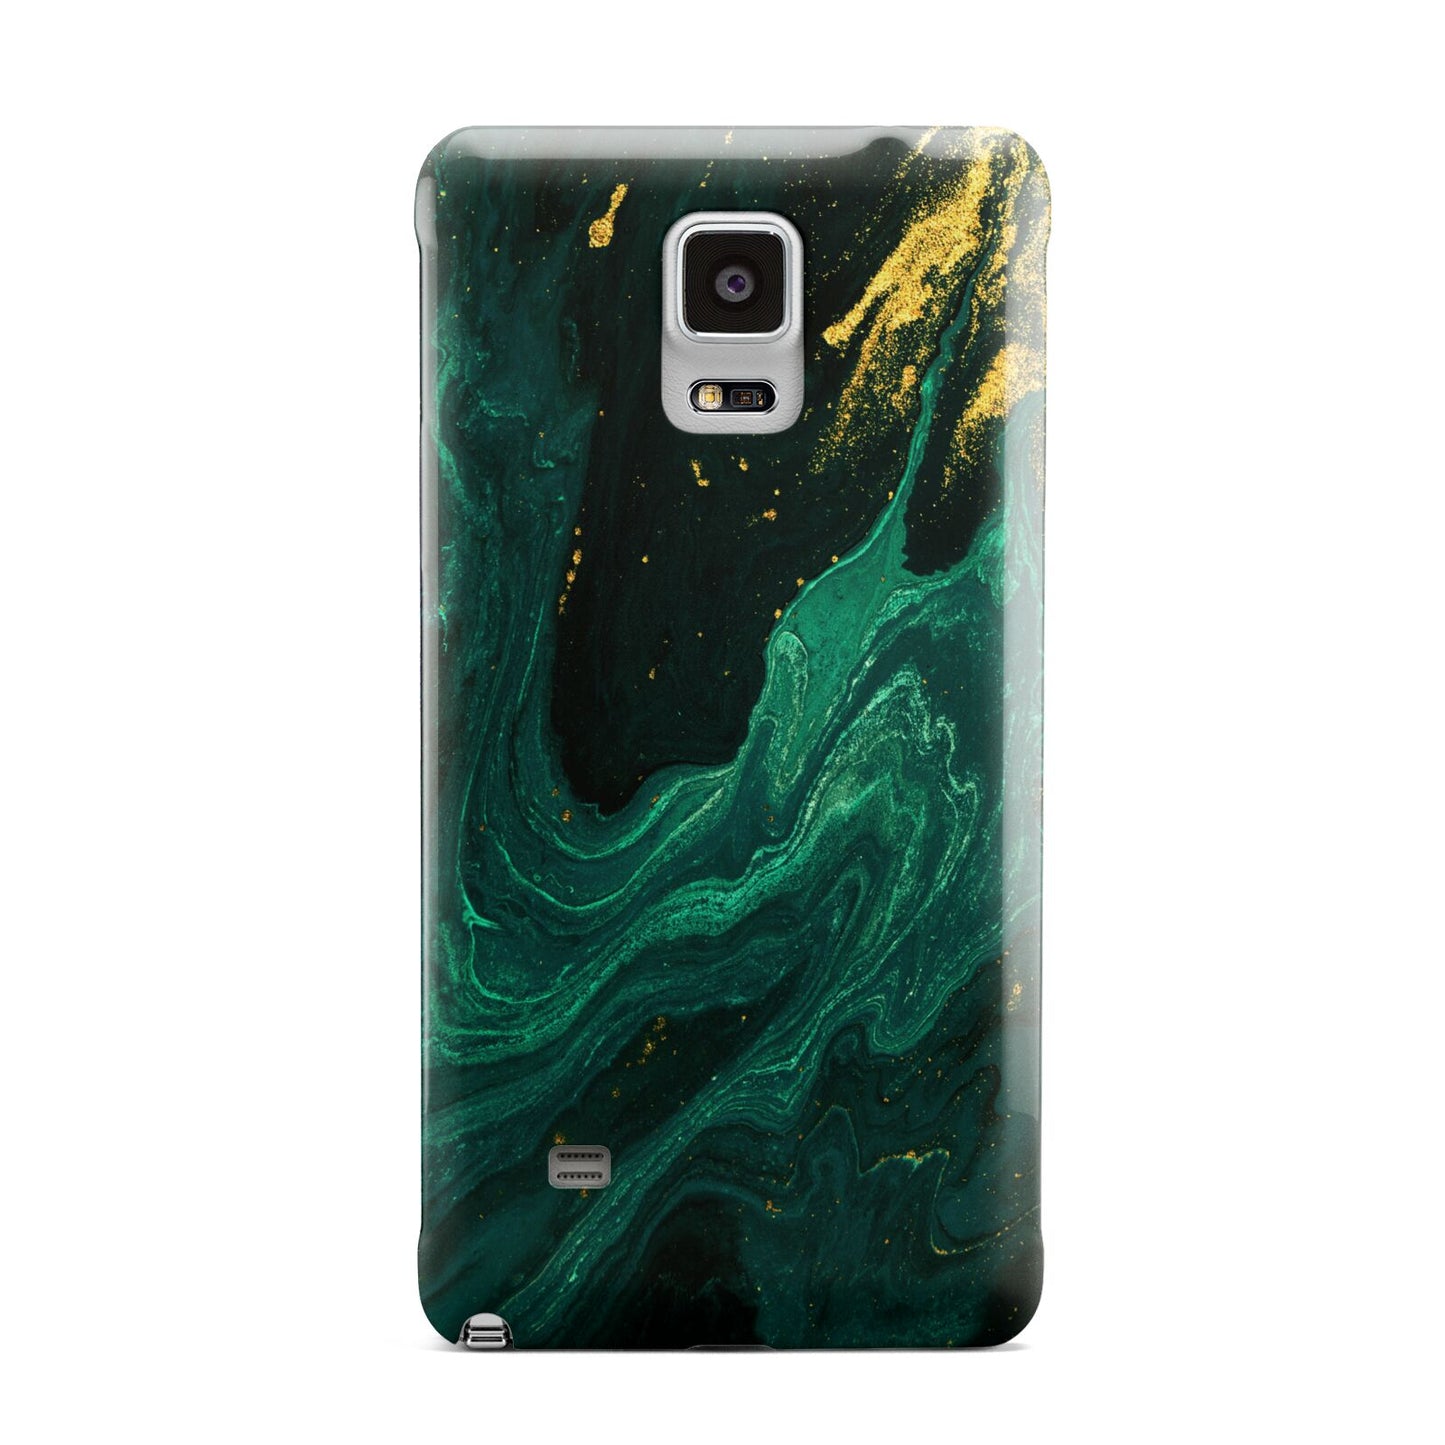 Emerald Green Samsung Galaxy Note 4 Case